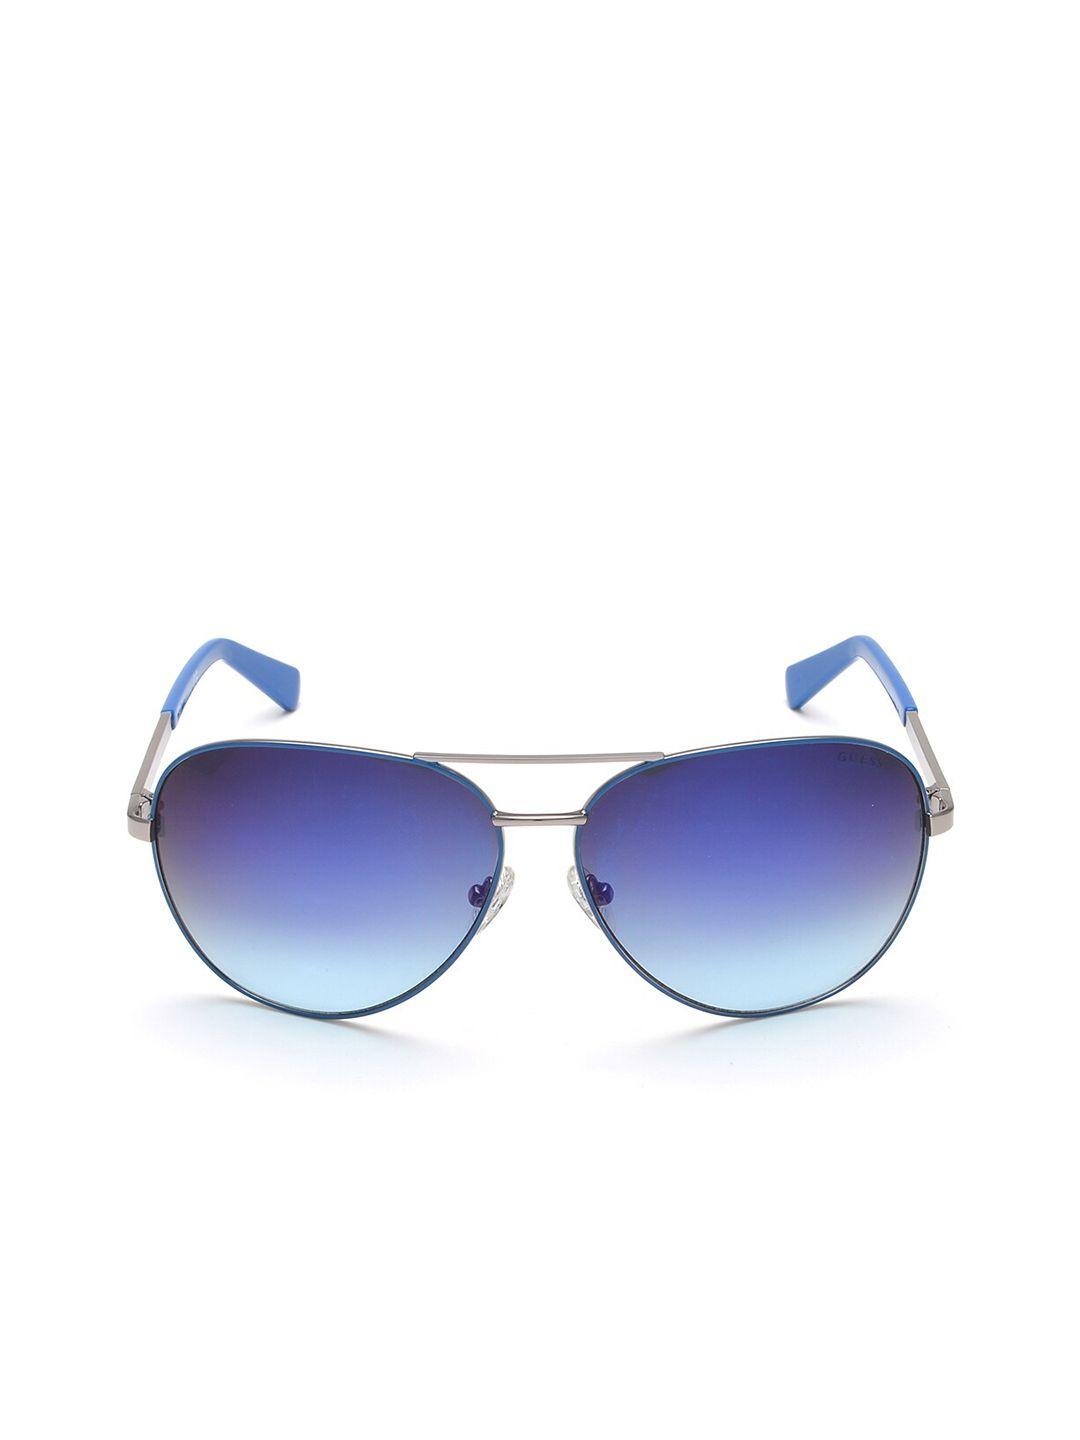 guess-men-blue-aviator-sunglasses-gus000136392xsg